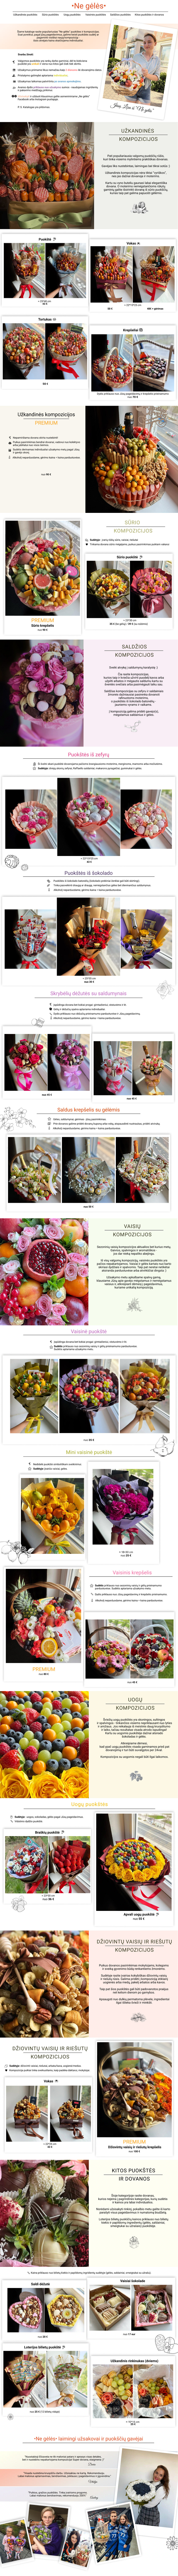 Flowers Flower Shop catalog Catalogue Catalogue design brochure floral Fruit foodflorist foodfloristics